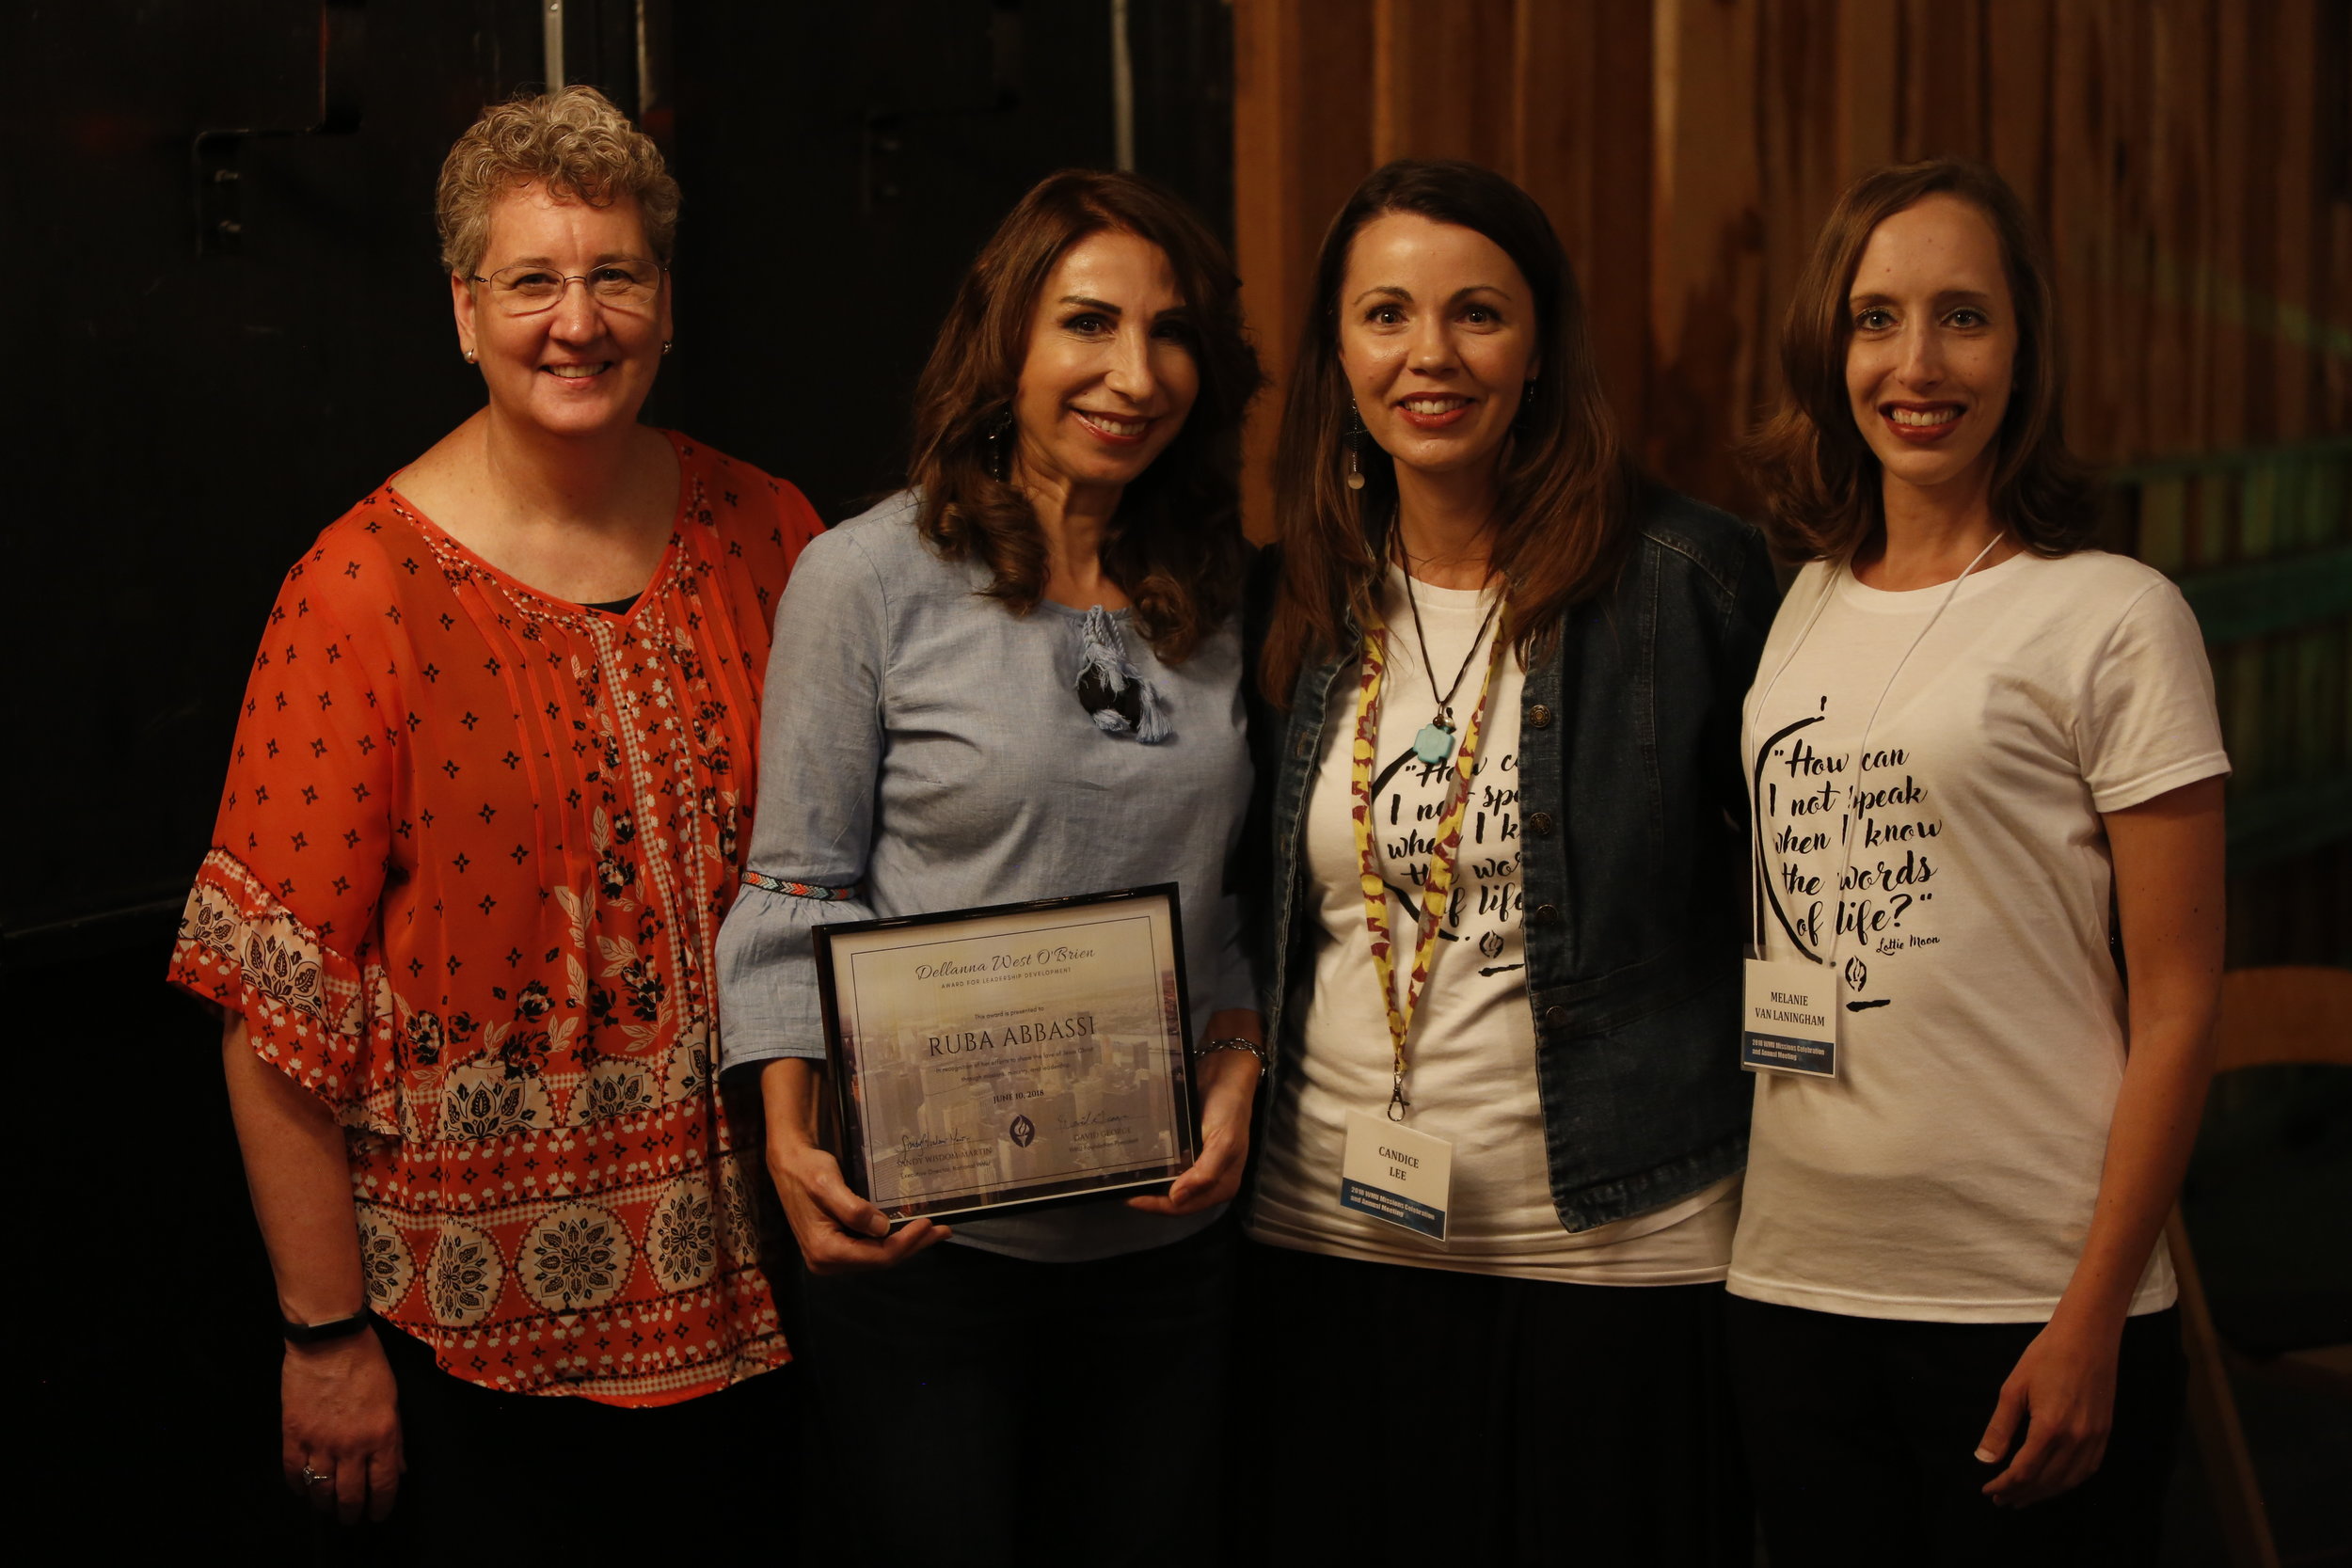 Sandy Wisdom-Martin, Ruba Abbassi, Candice Lee, and Melanie VanLaningham celebrate the O’Brien Award for Women’s Leadership Development.